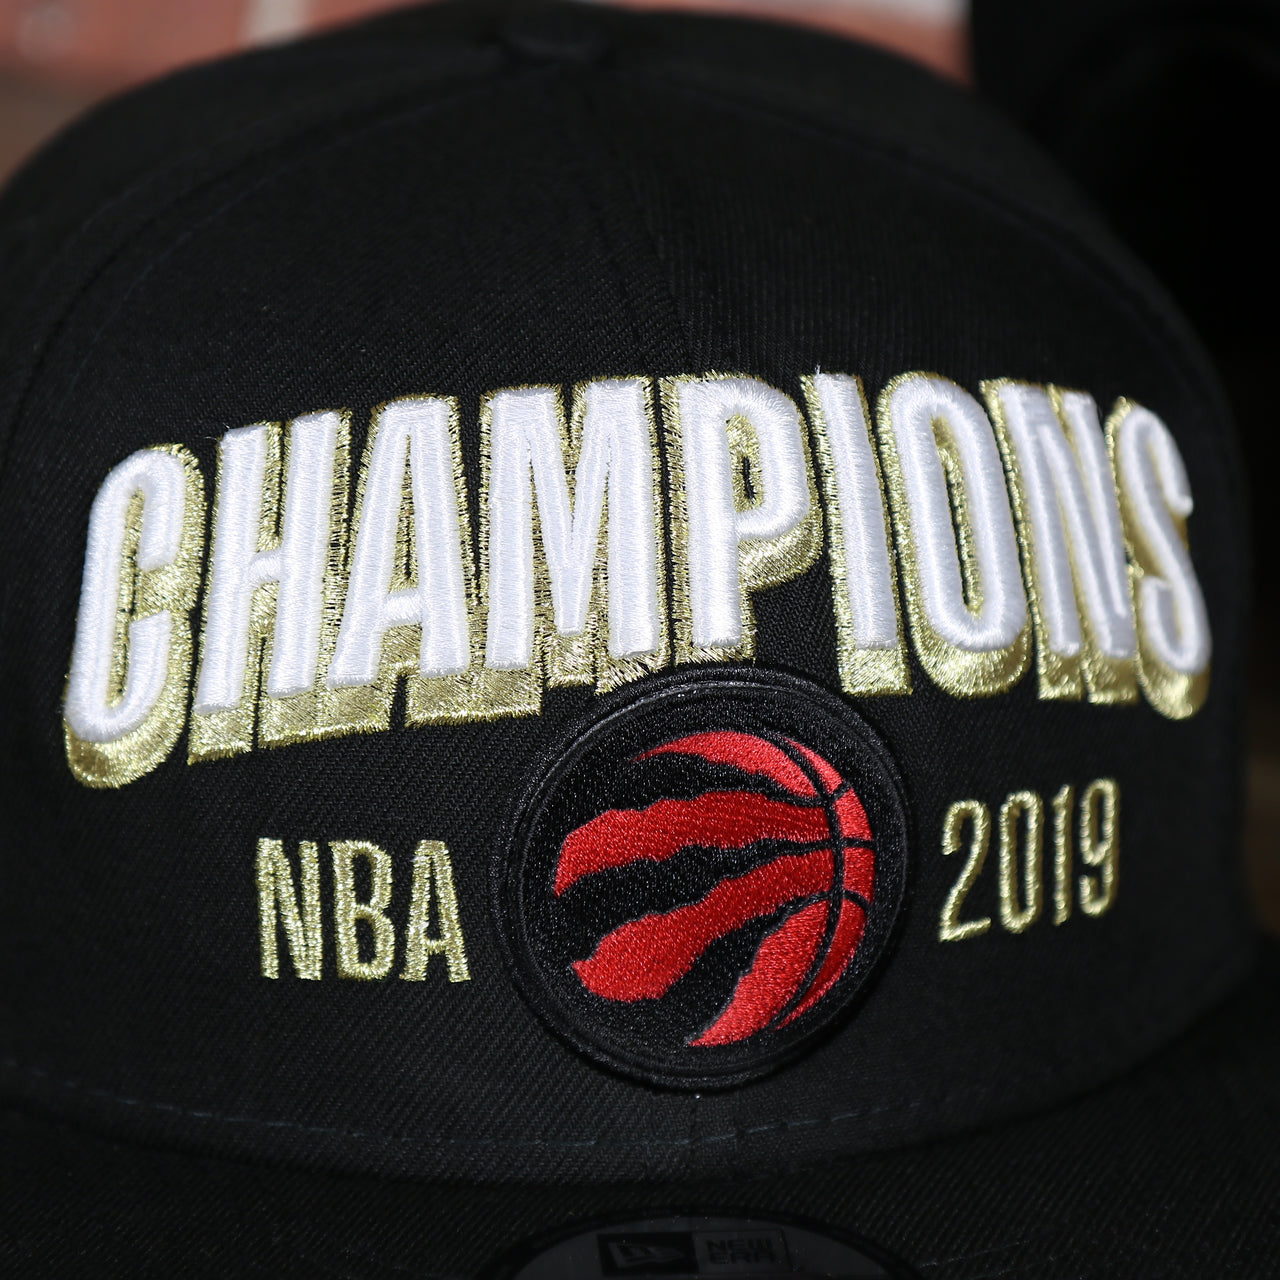 raptors logo on the Men's Toronto Raptors New Era Black 2019 NBA Finals On Court Champions Locker Room 9FIFTY Snapback Hat